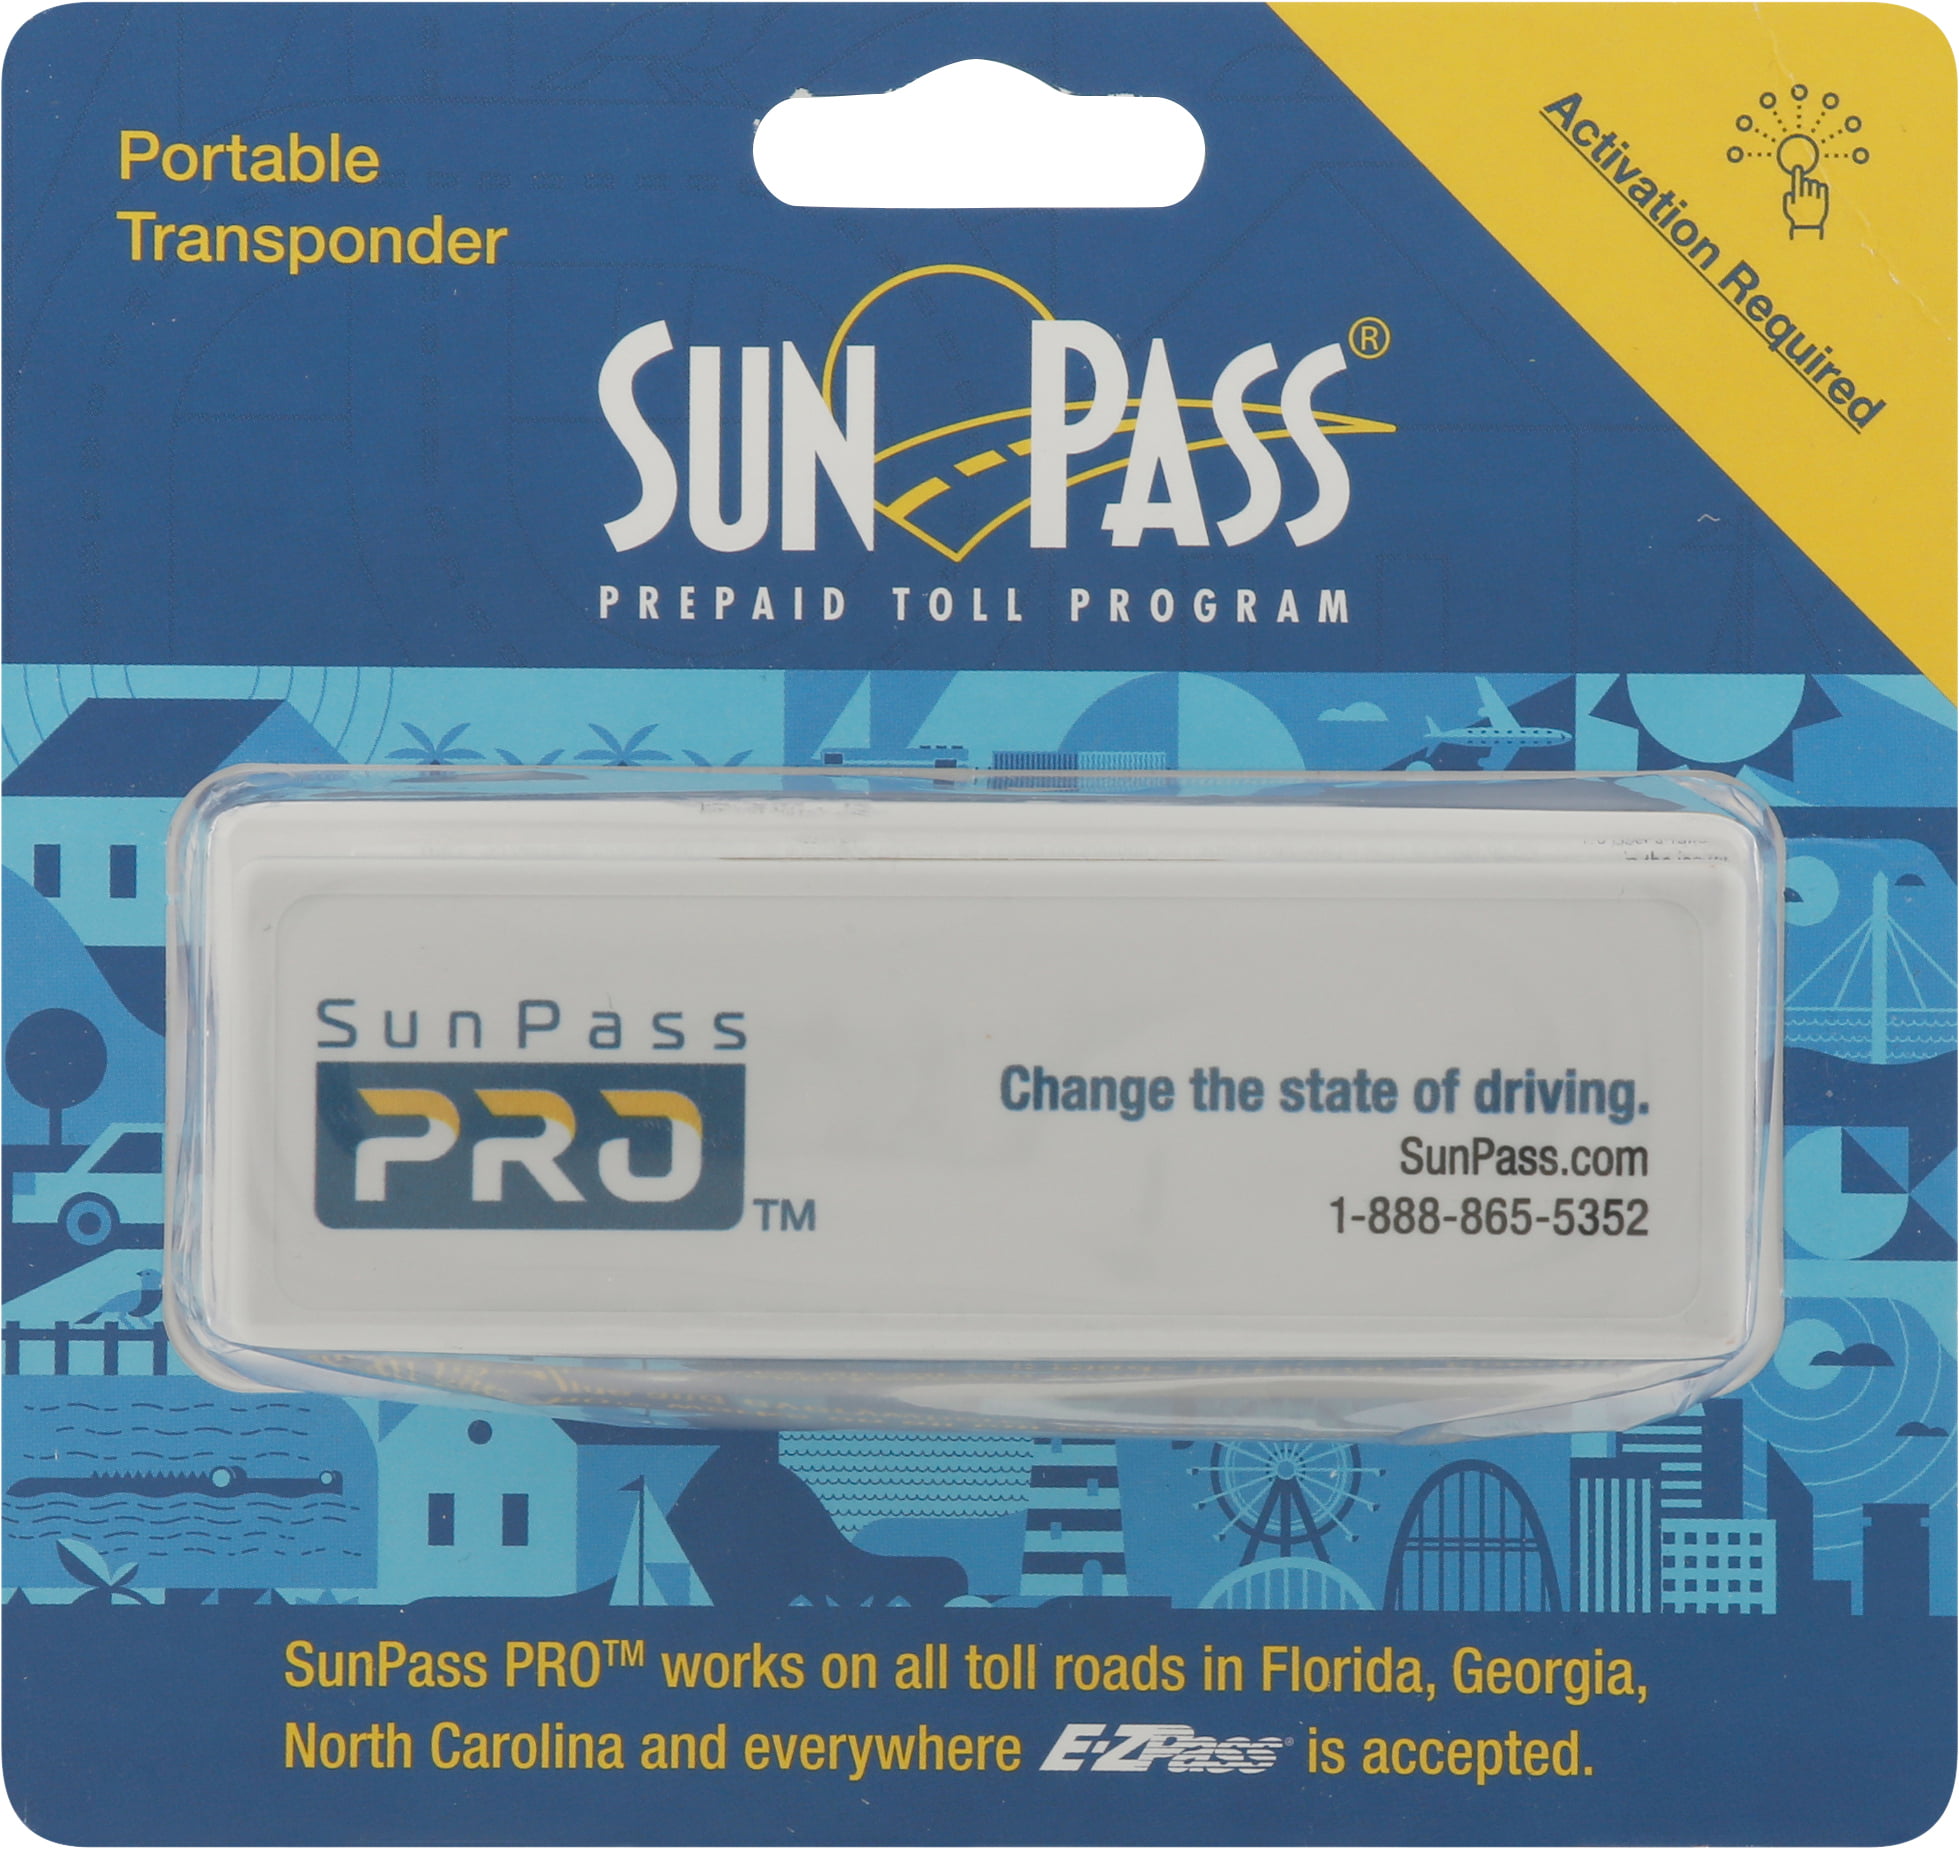 sunpass-sun-pass-transponder-portable-prepaid-toll-program-for-florida